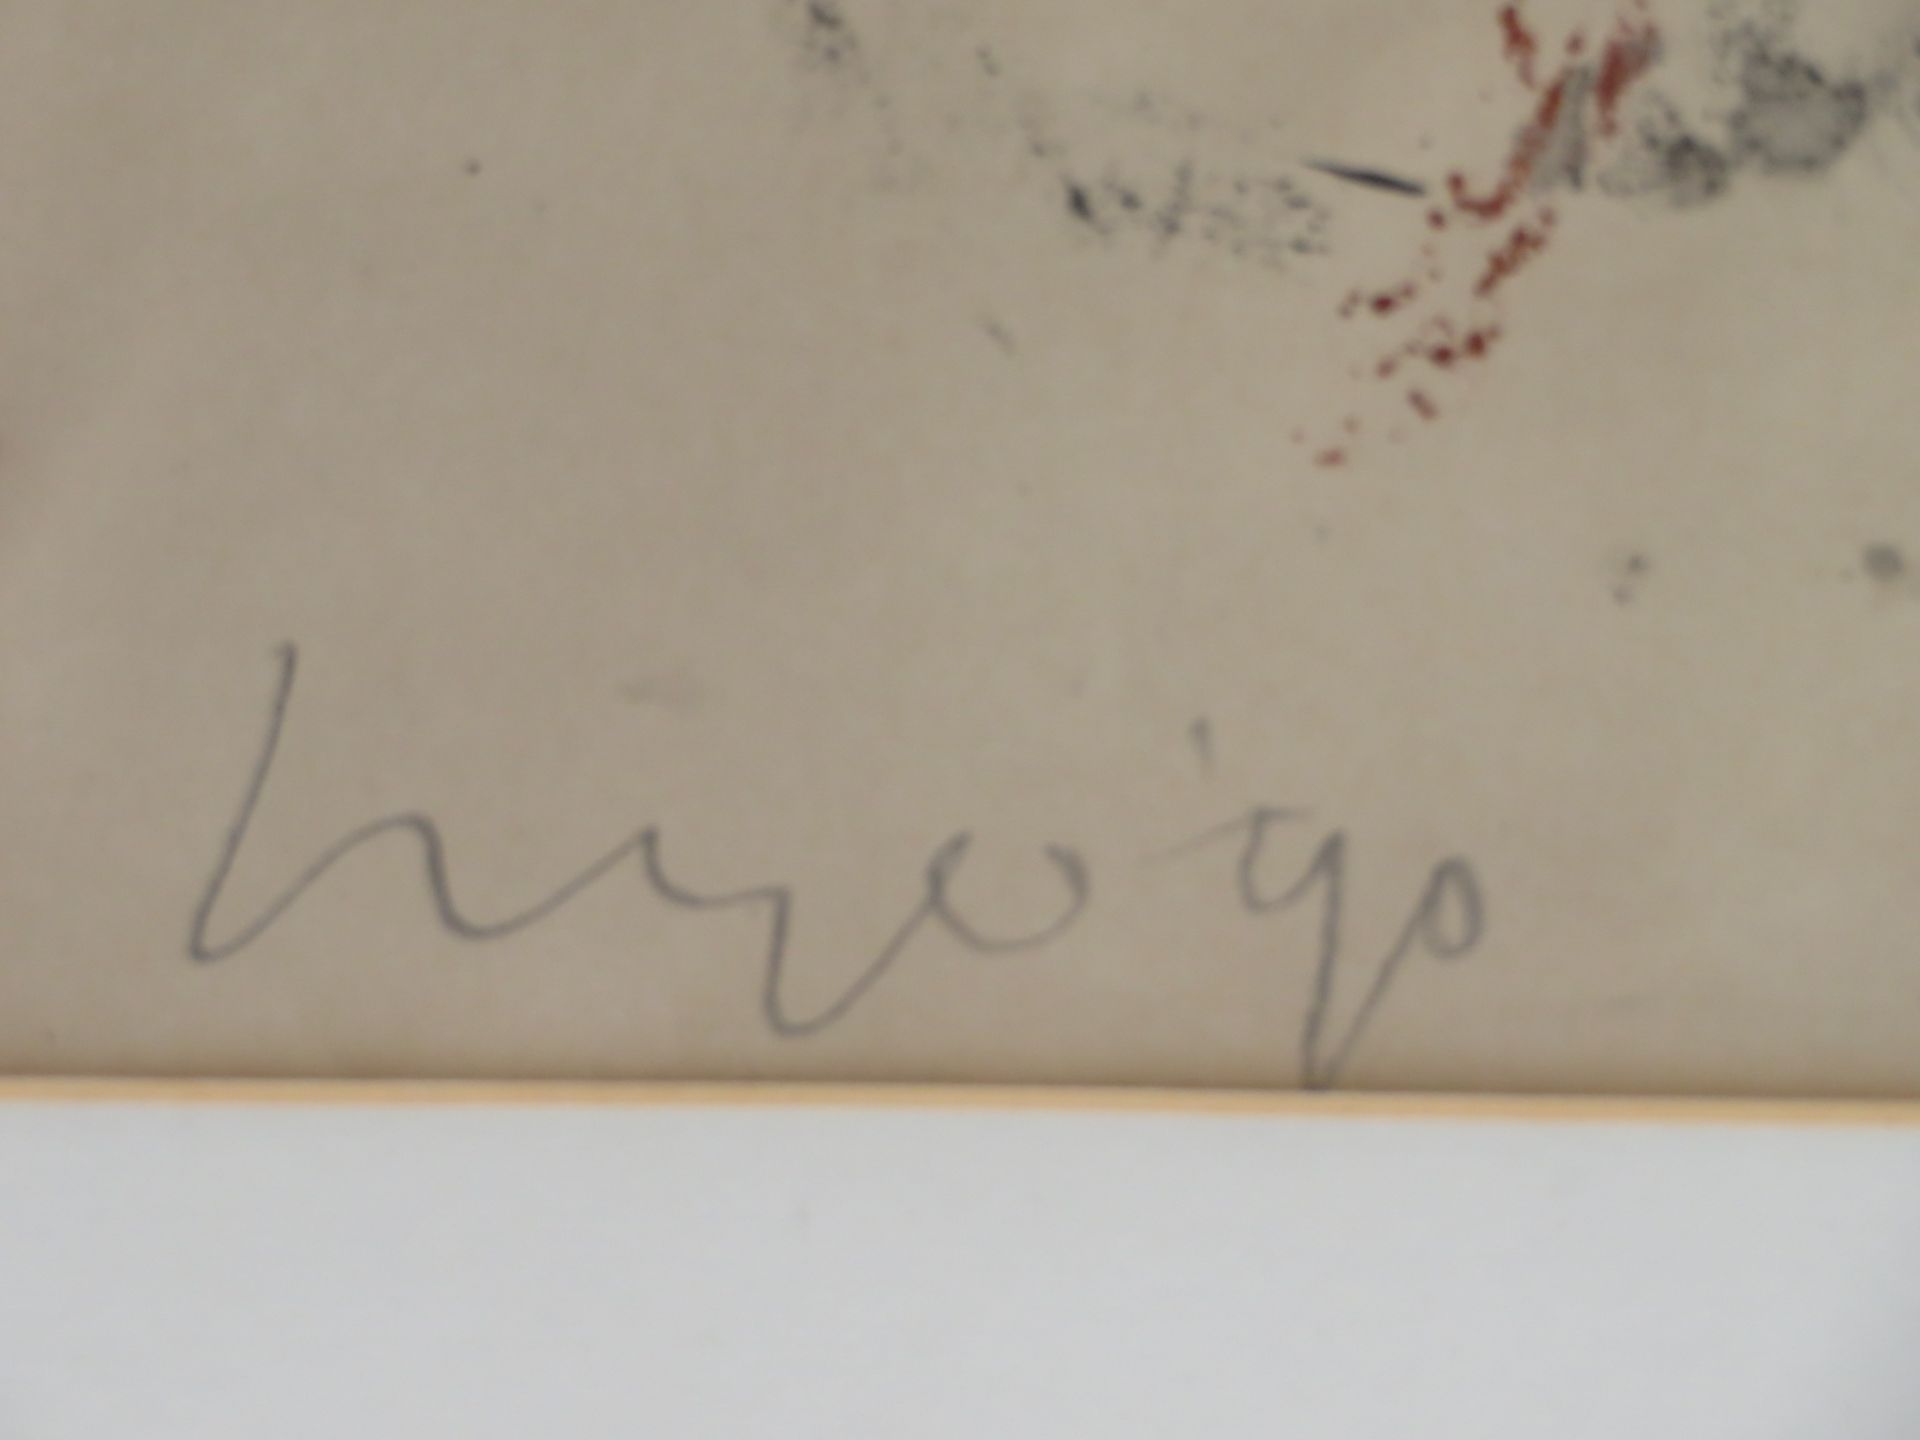 Unles.sign., "Komposition", u. Bleistift sign.u.dat. (19)90, Aquarell, 31 x 20 cm, R. [45 x 33 cm] - Bild 2 aus 2